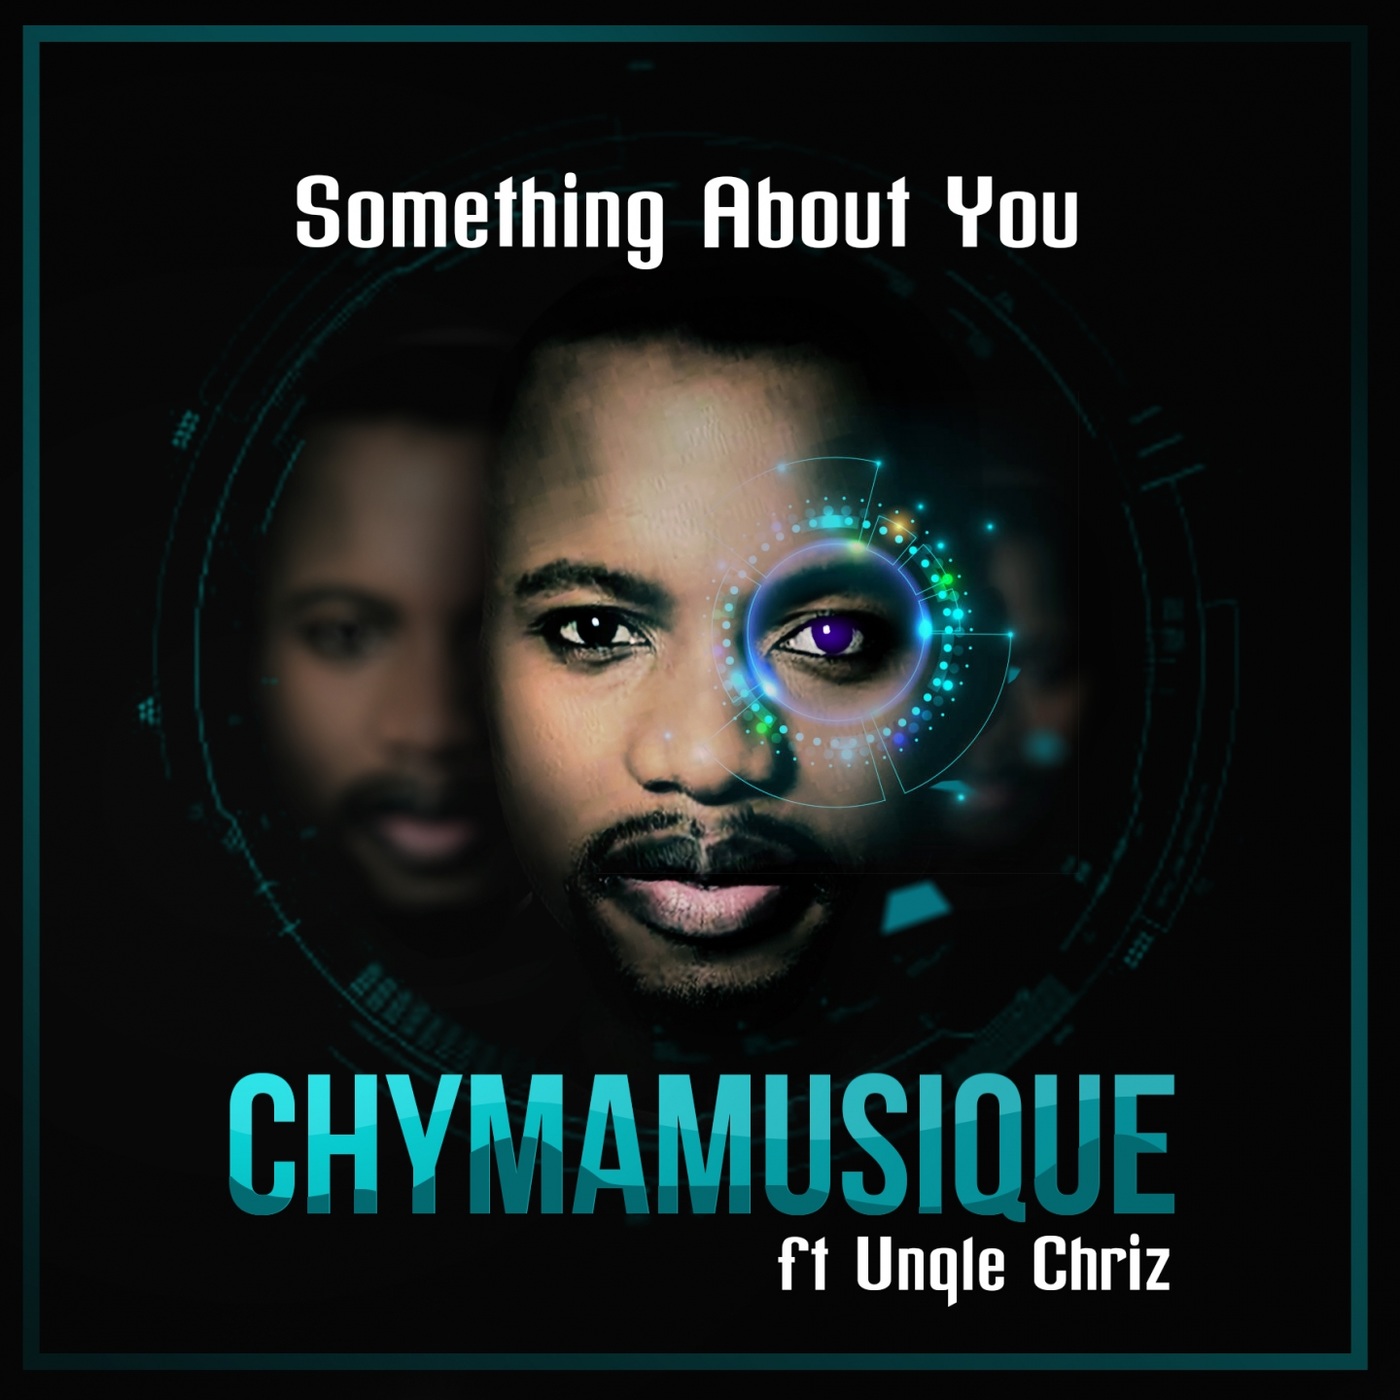 Chymamusique ft Unqle Chriz - Something About You / Chymamusiq records